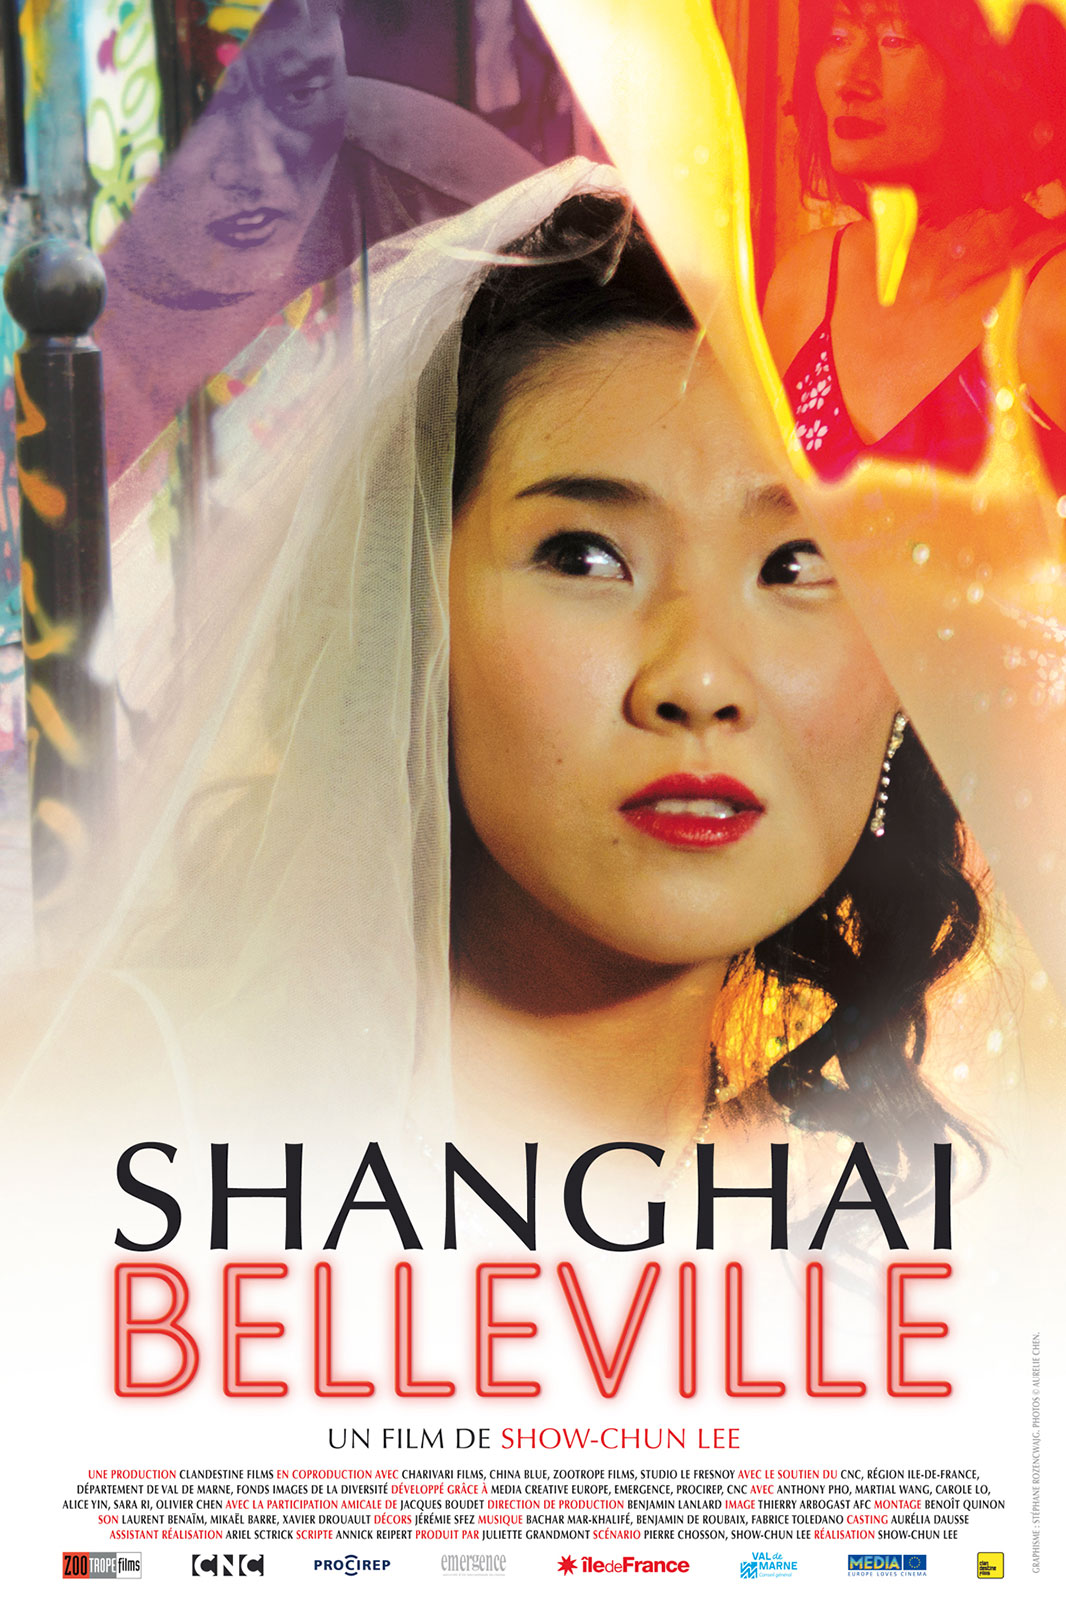 Shanghaï Belleville